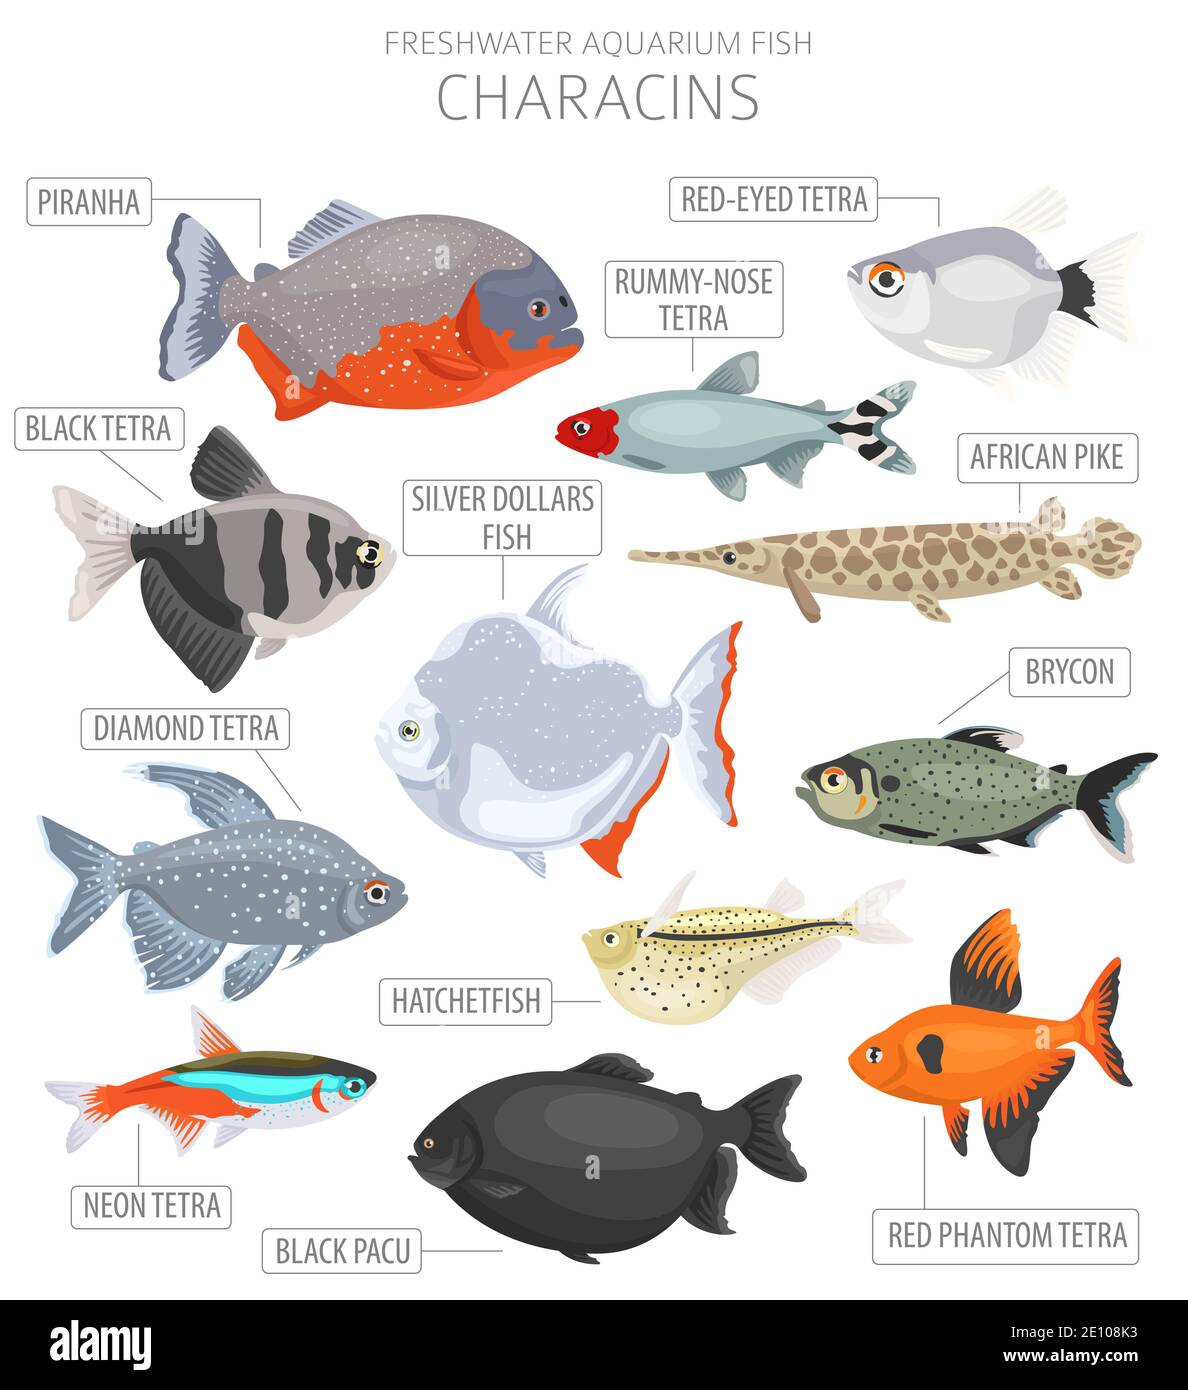 Characins fish. Freshwater aquarium fish icon set flat style isolated on white.  Vector illustration Stock Vector